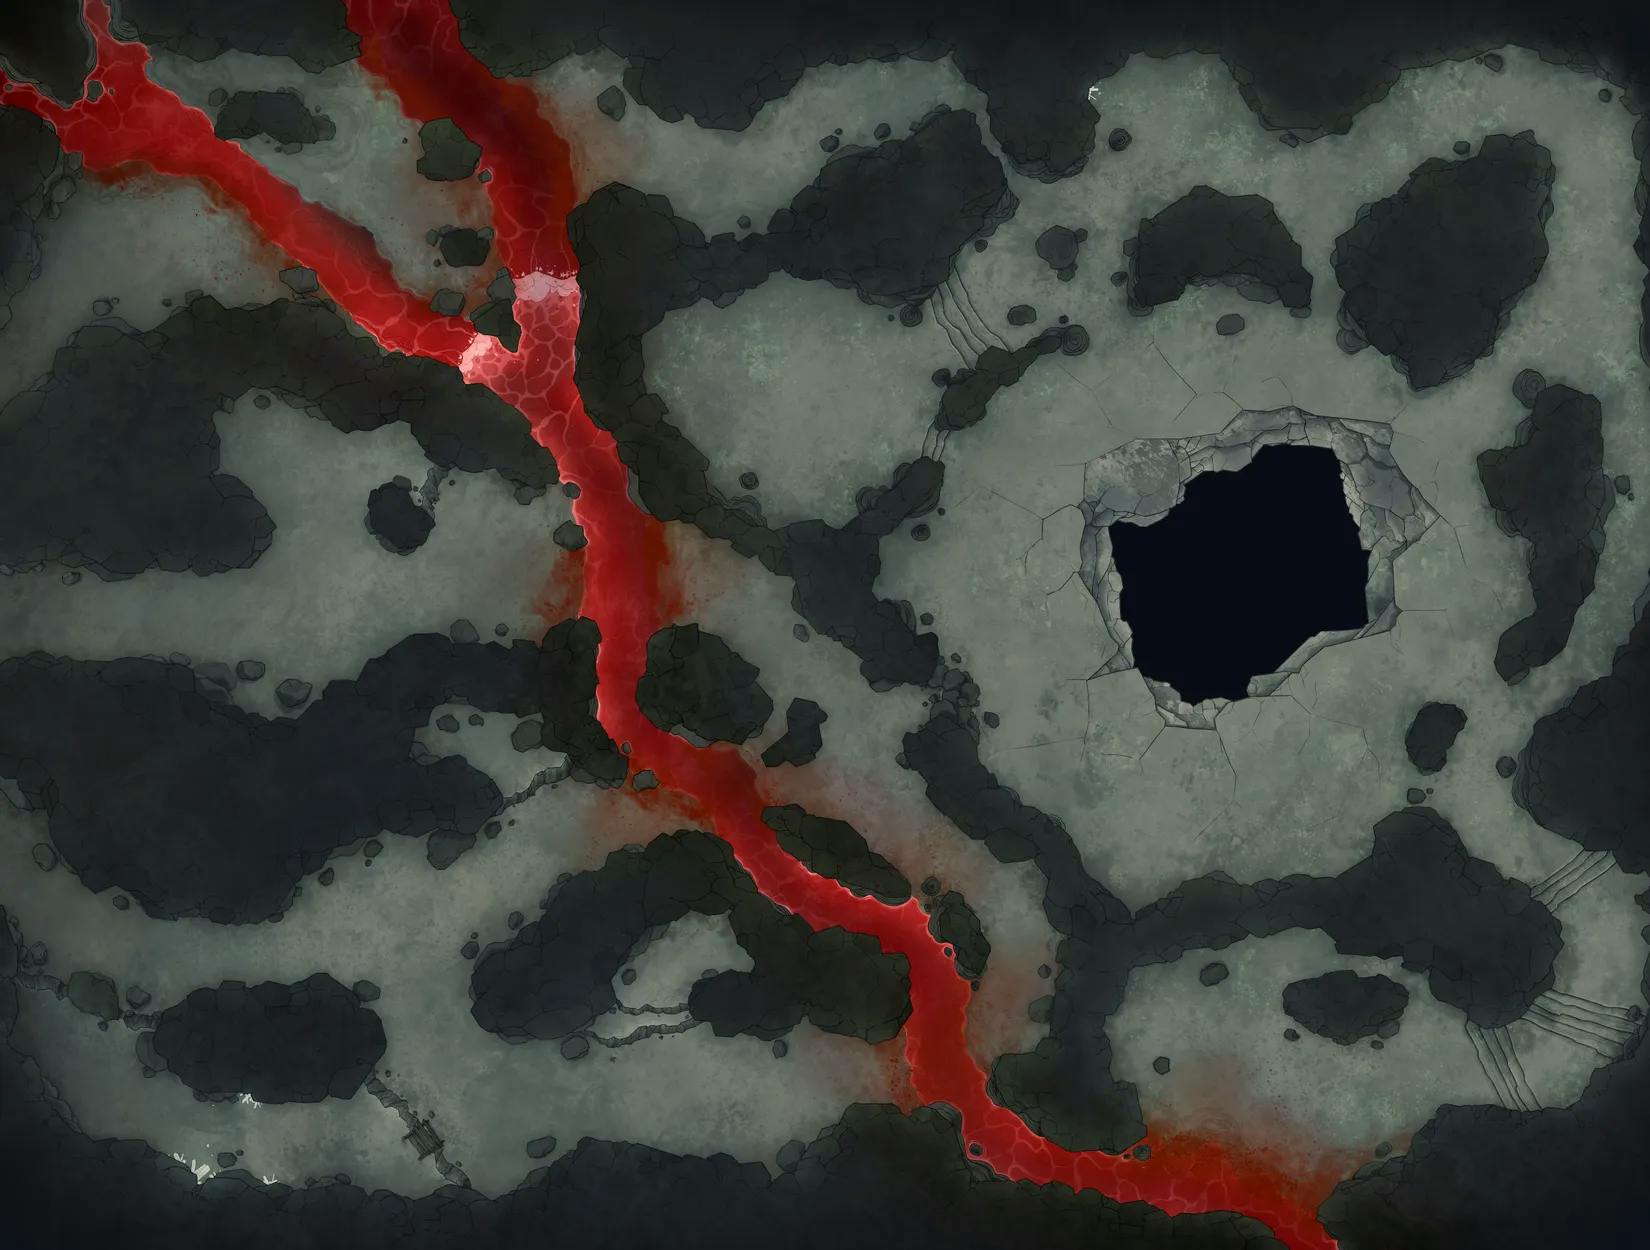 Mushroom Infested Mines map, Blood River variant